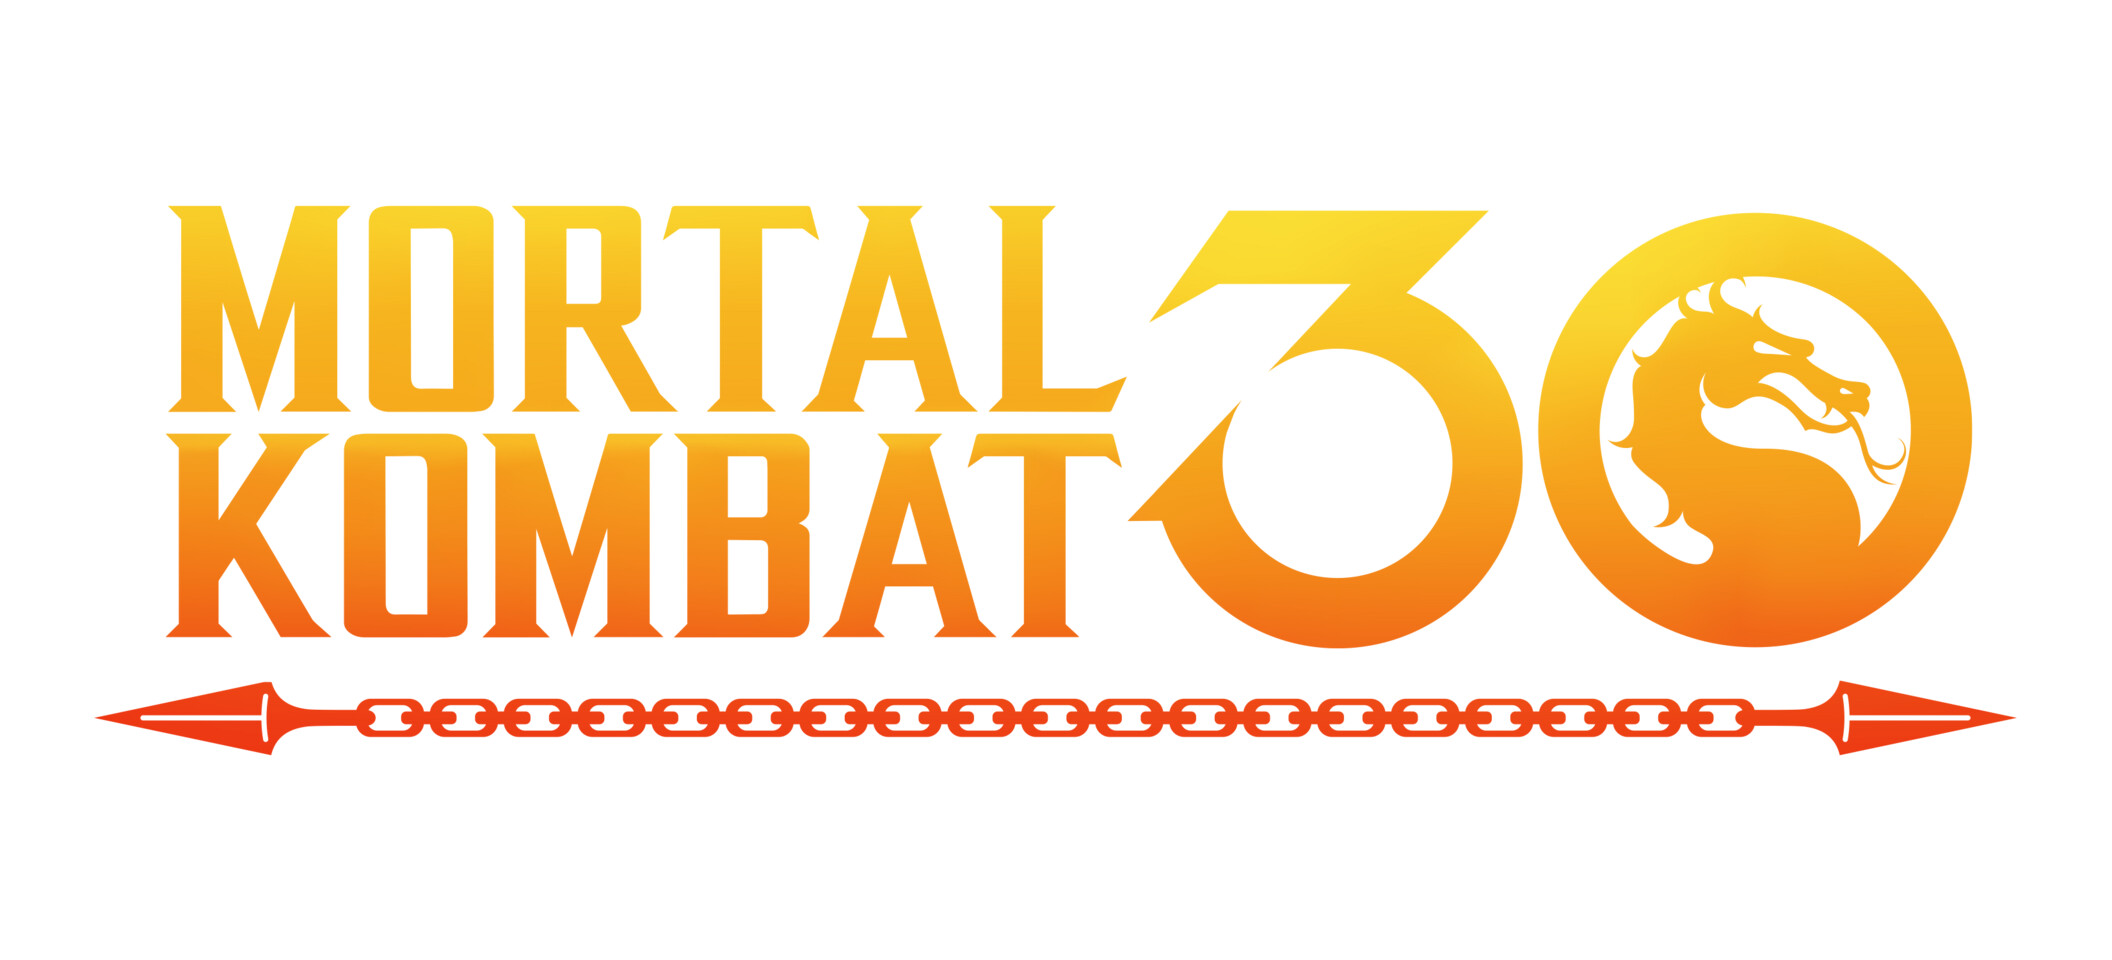 30th Anniversary of Mortal Kombat